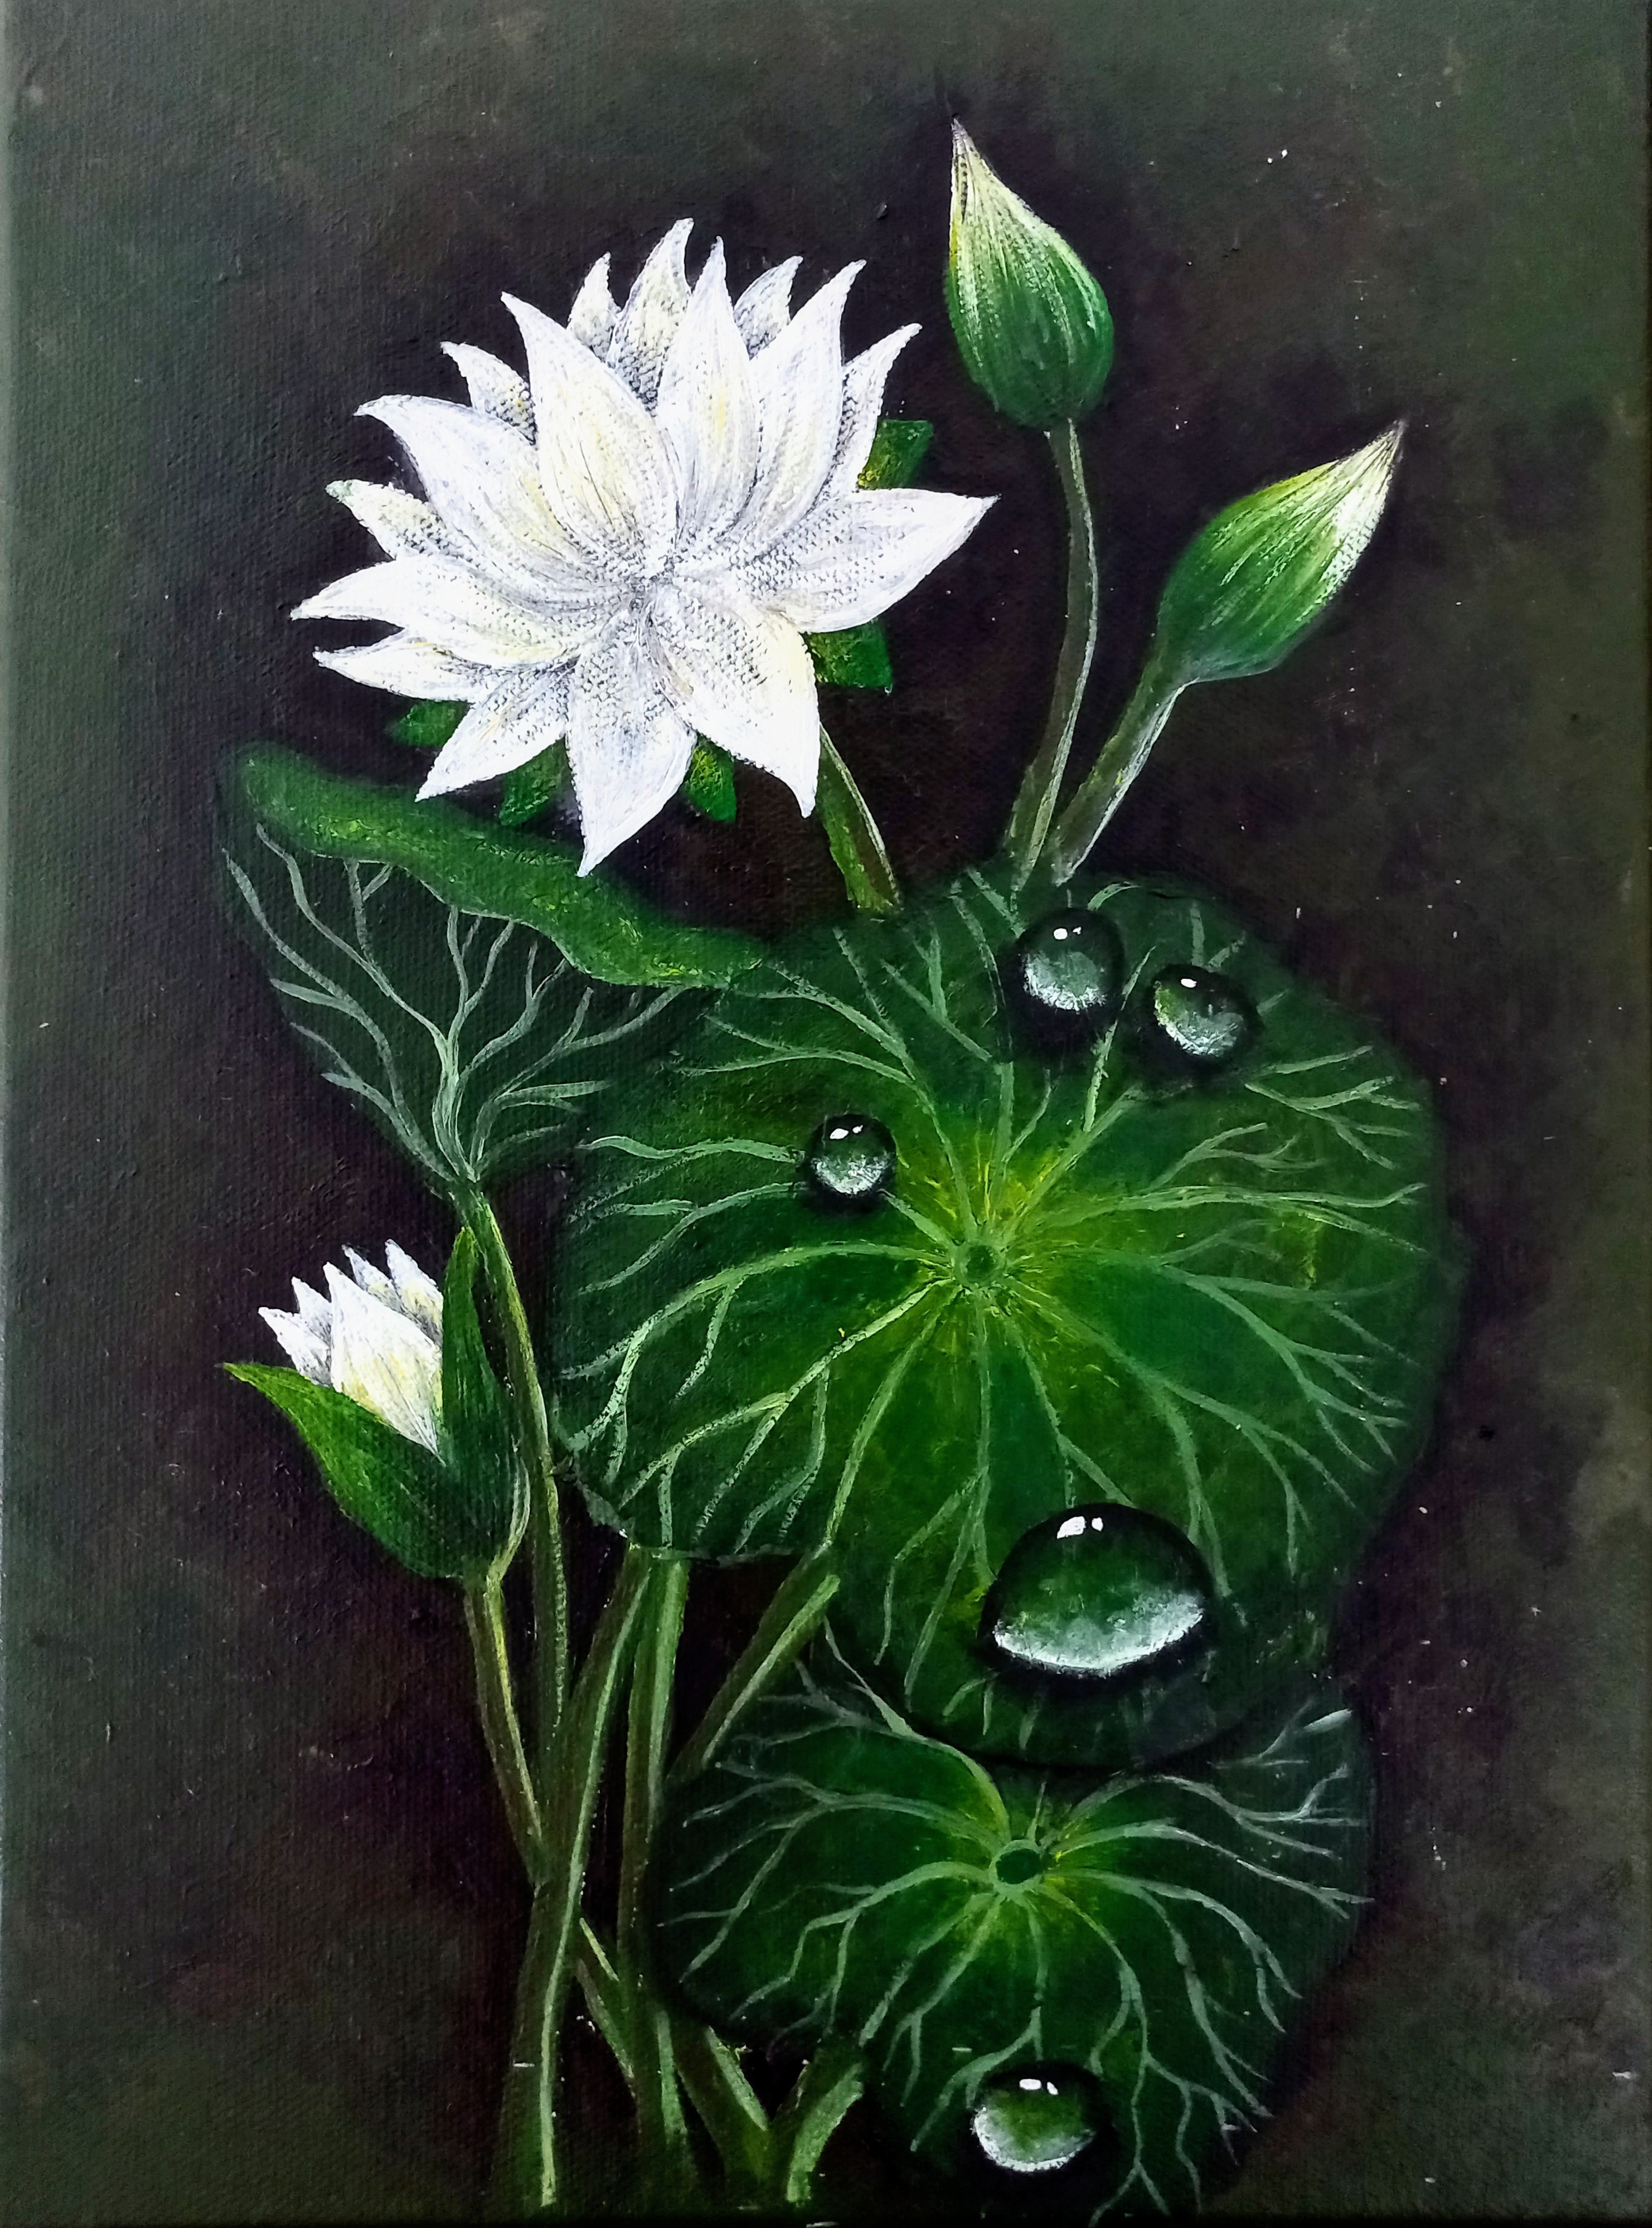 The White Lotus by Amaya Ranatunge